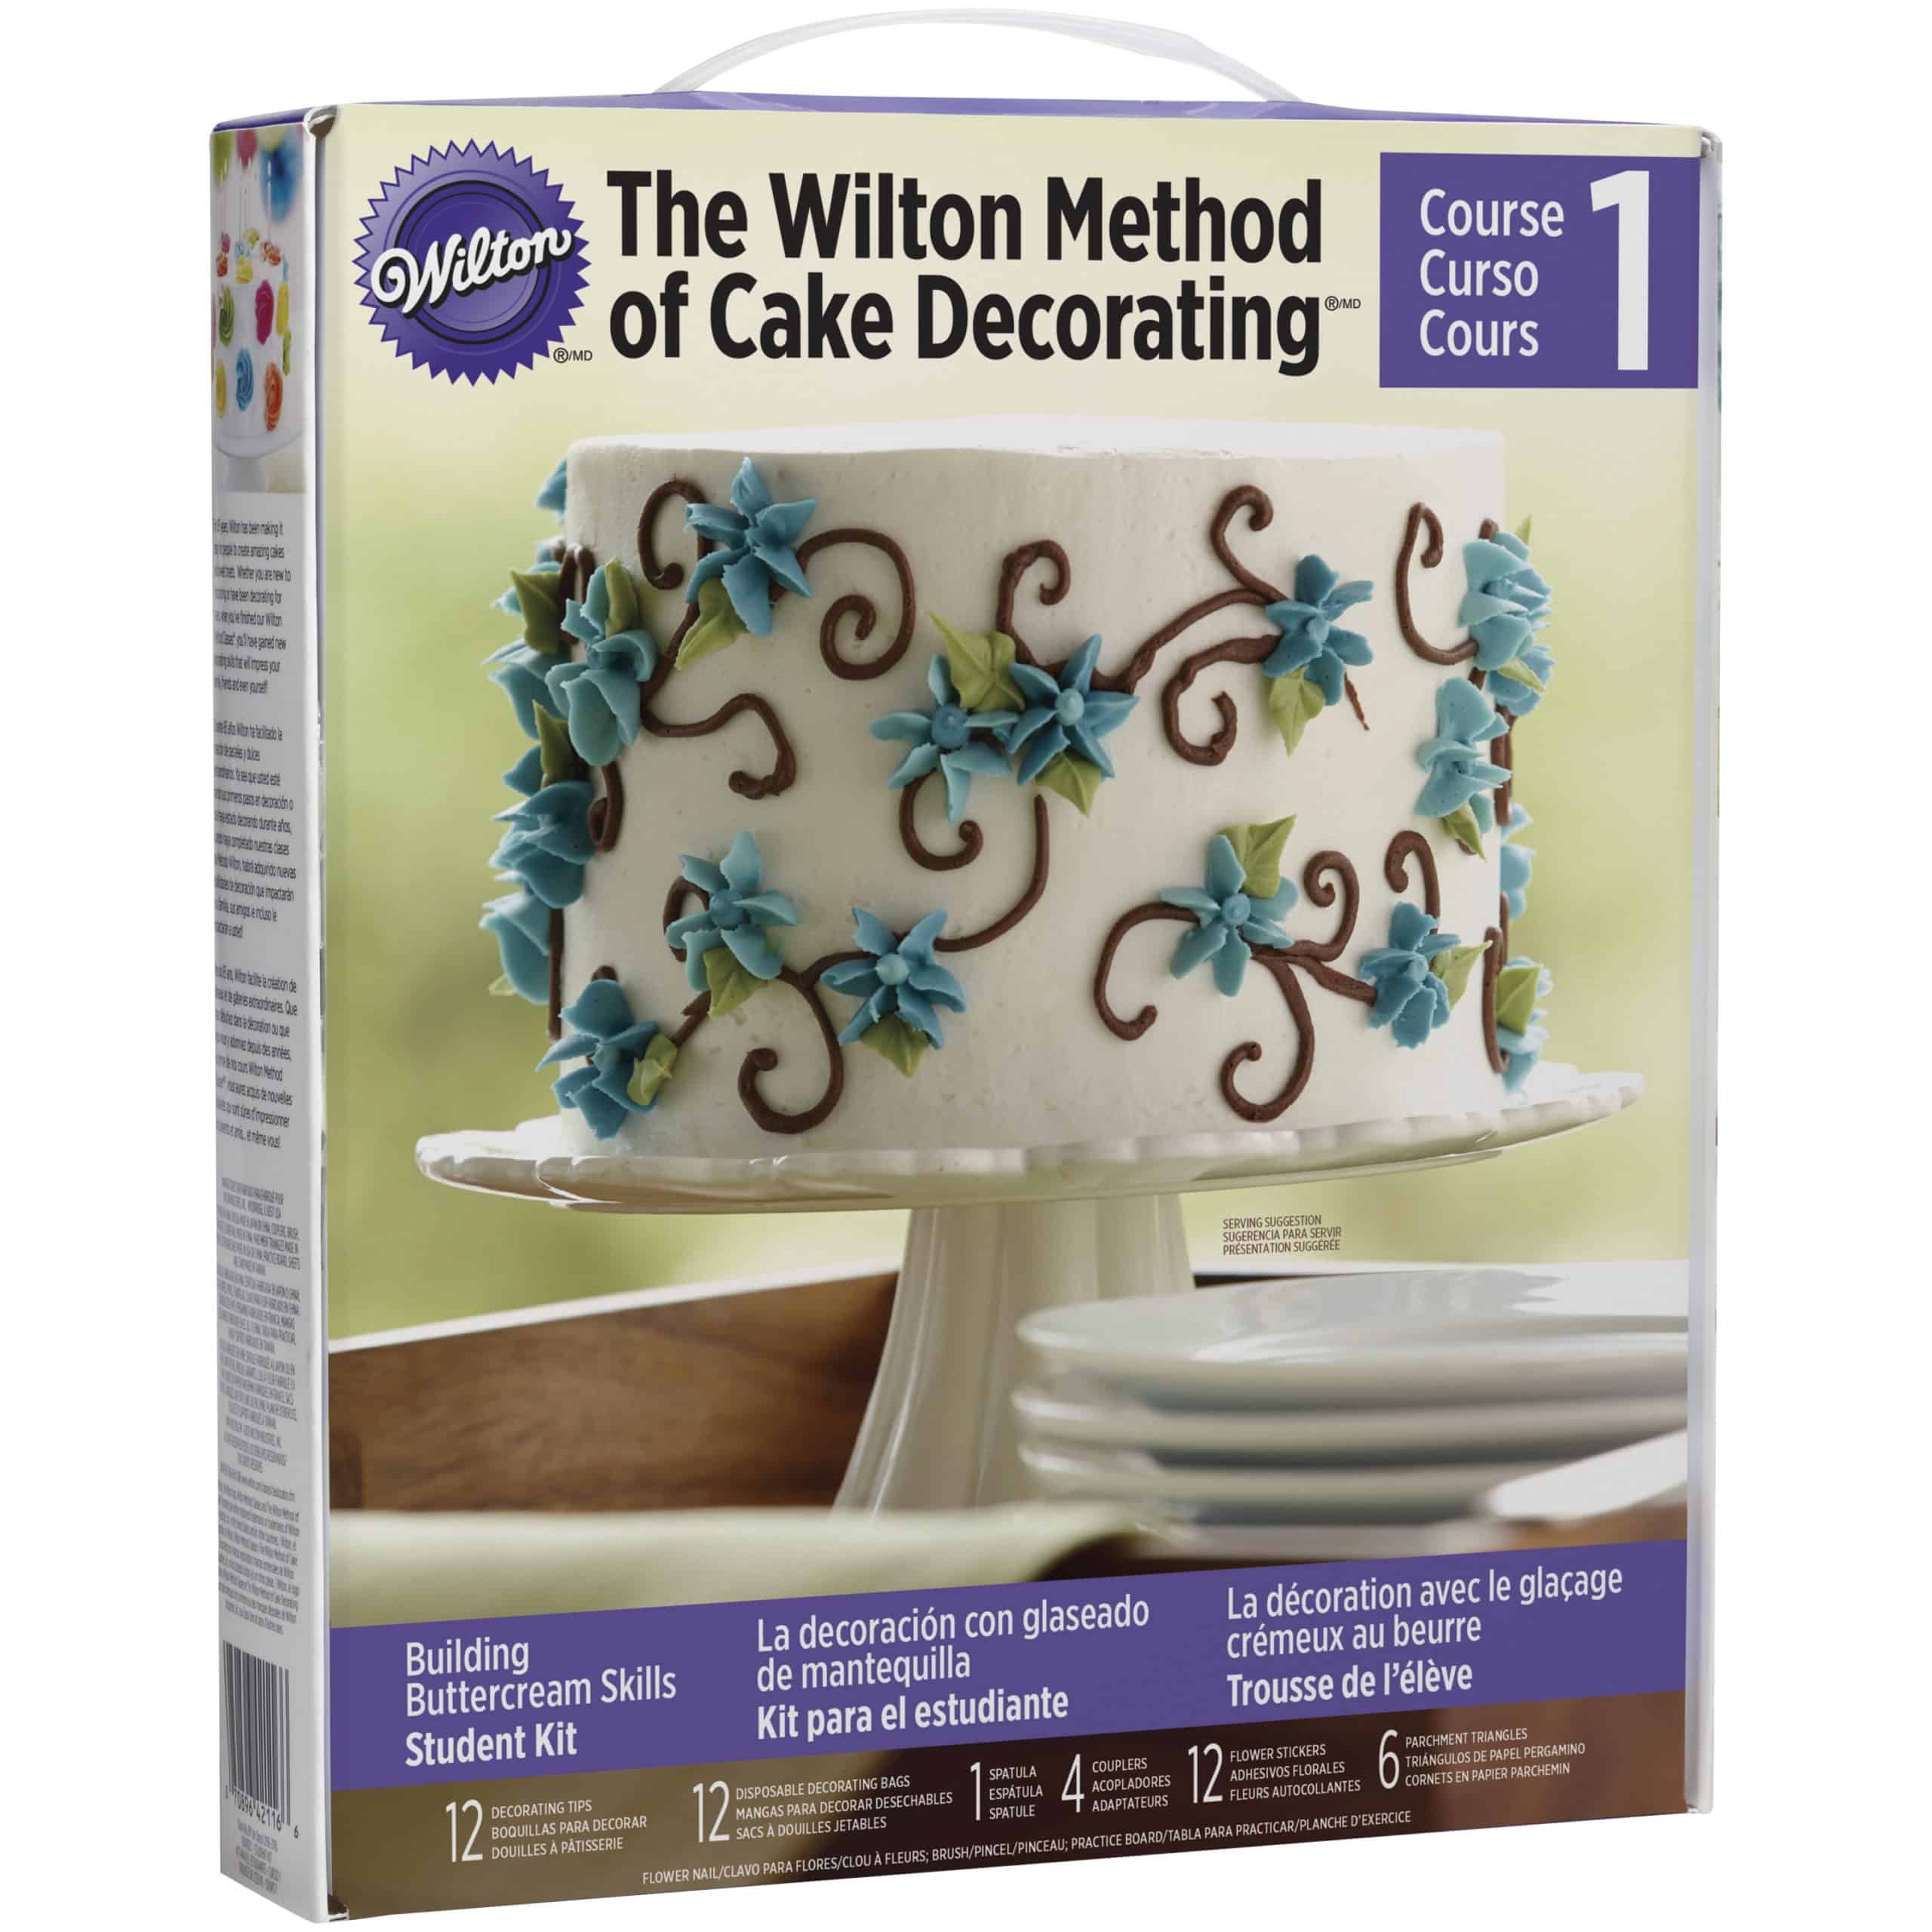 The Wilton Method of Cake Decorating, Course 1